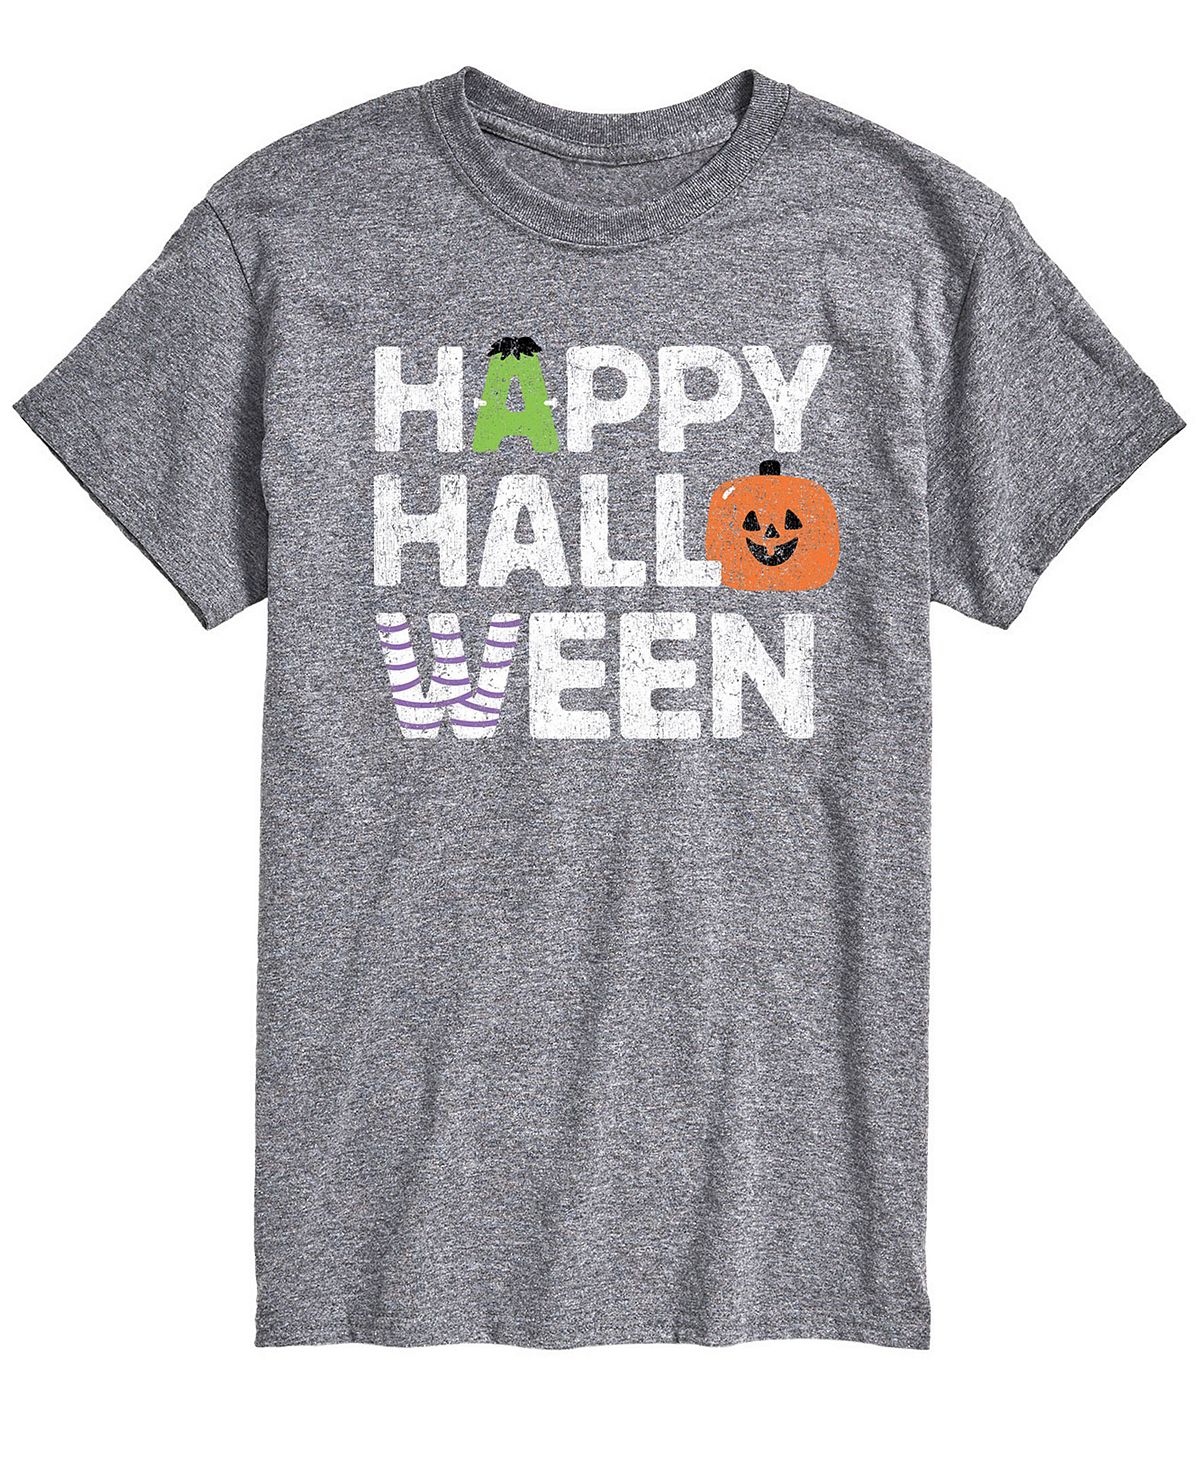 Мужская футболка классического кроя happy halloween AIRWAVES, серый